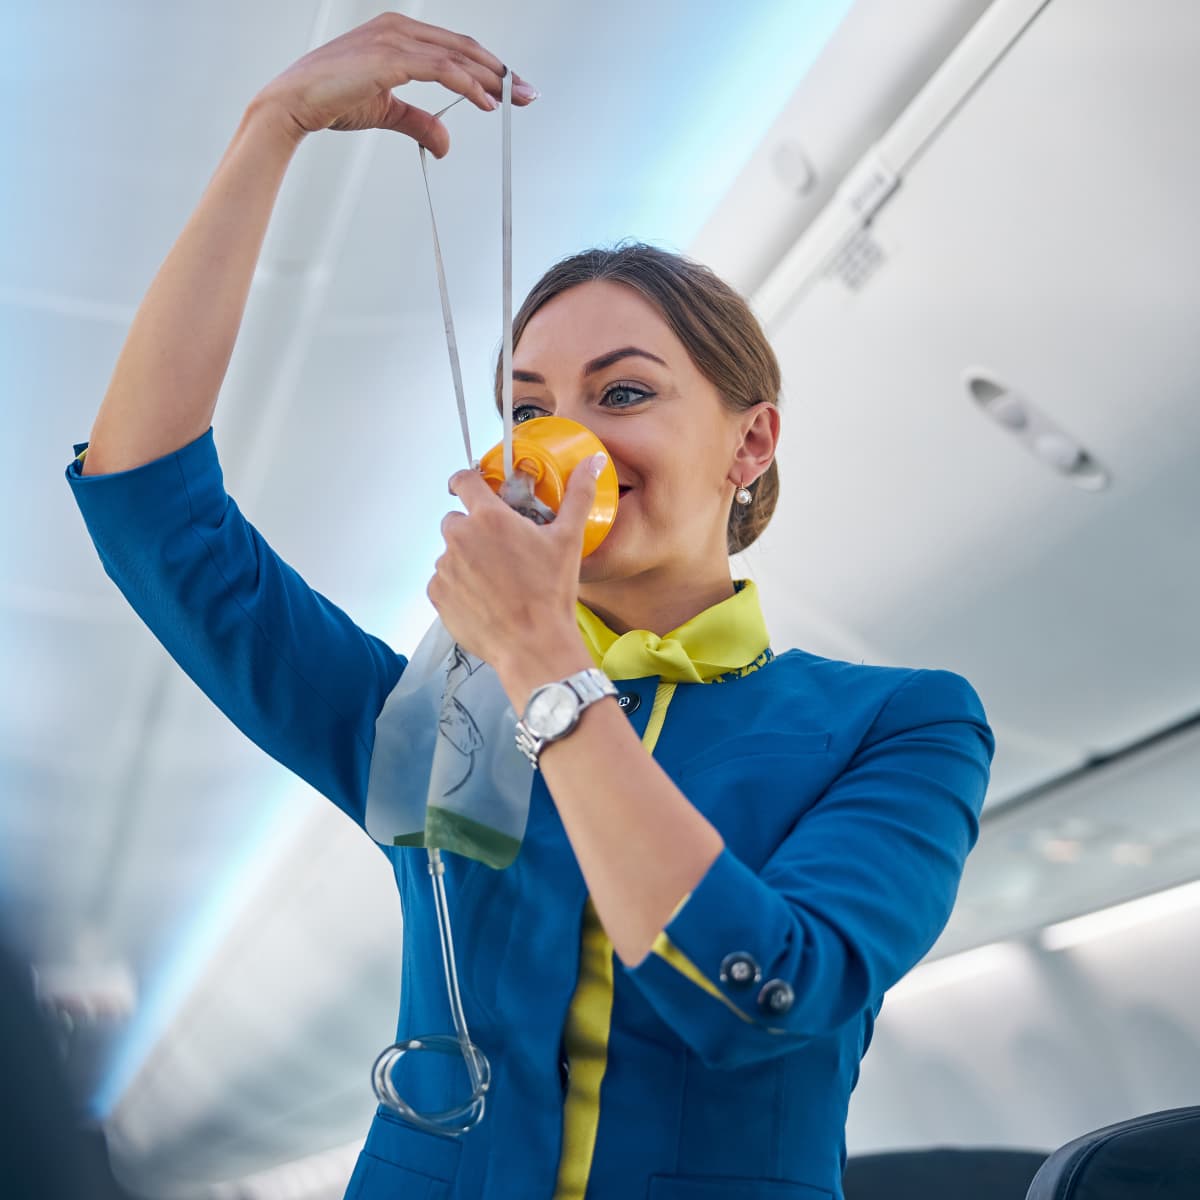 Flight Attendants Have a Secret Language You Didn't Know About